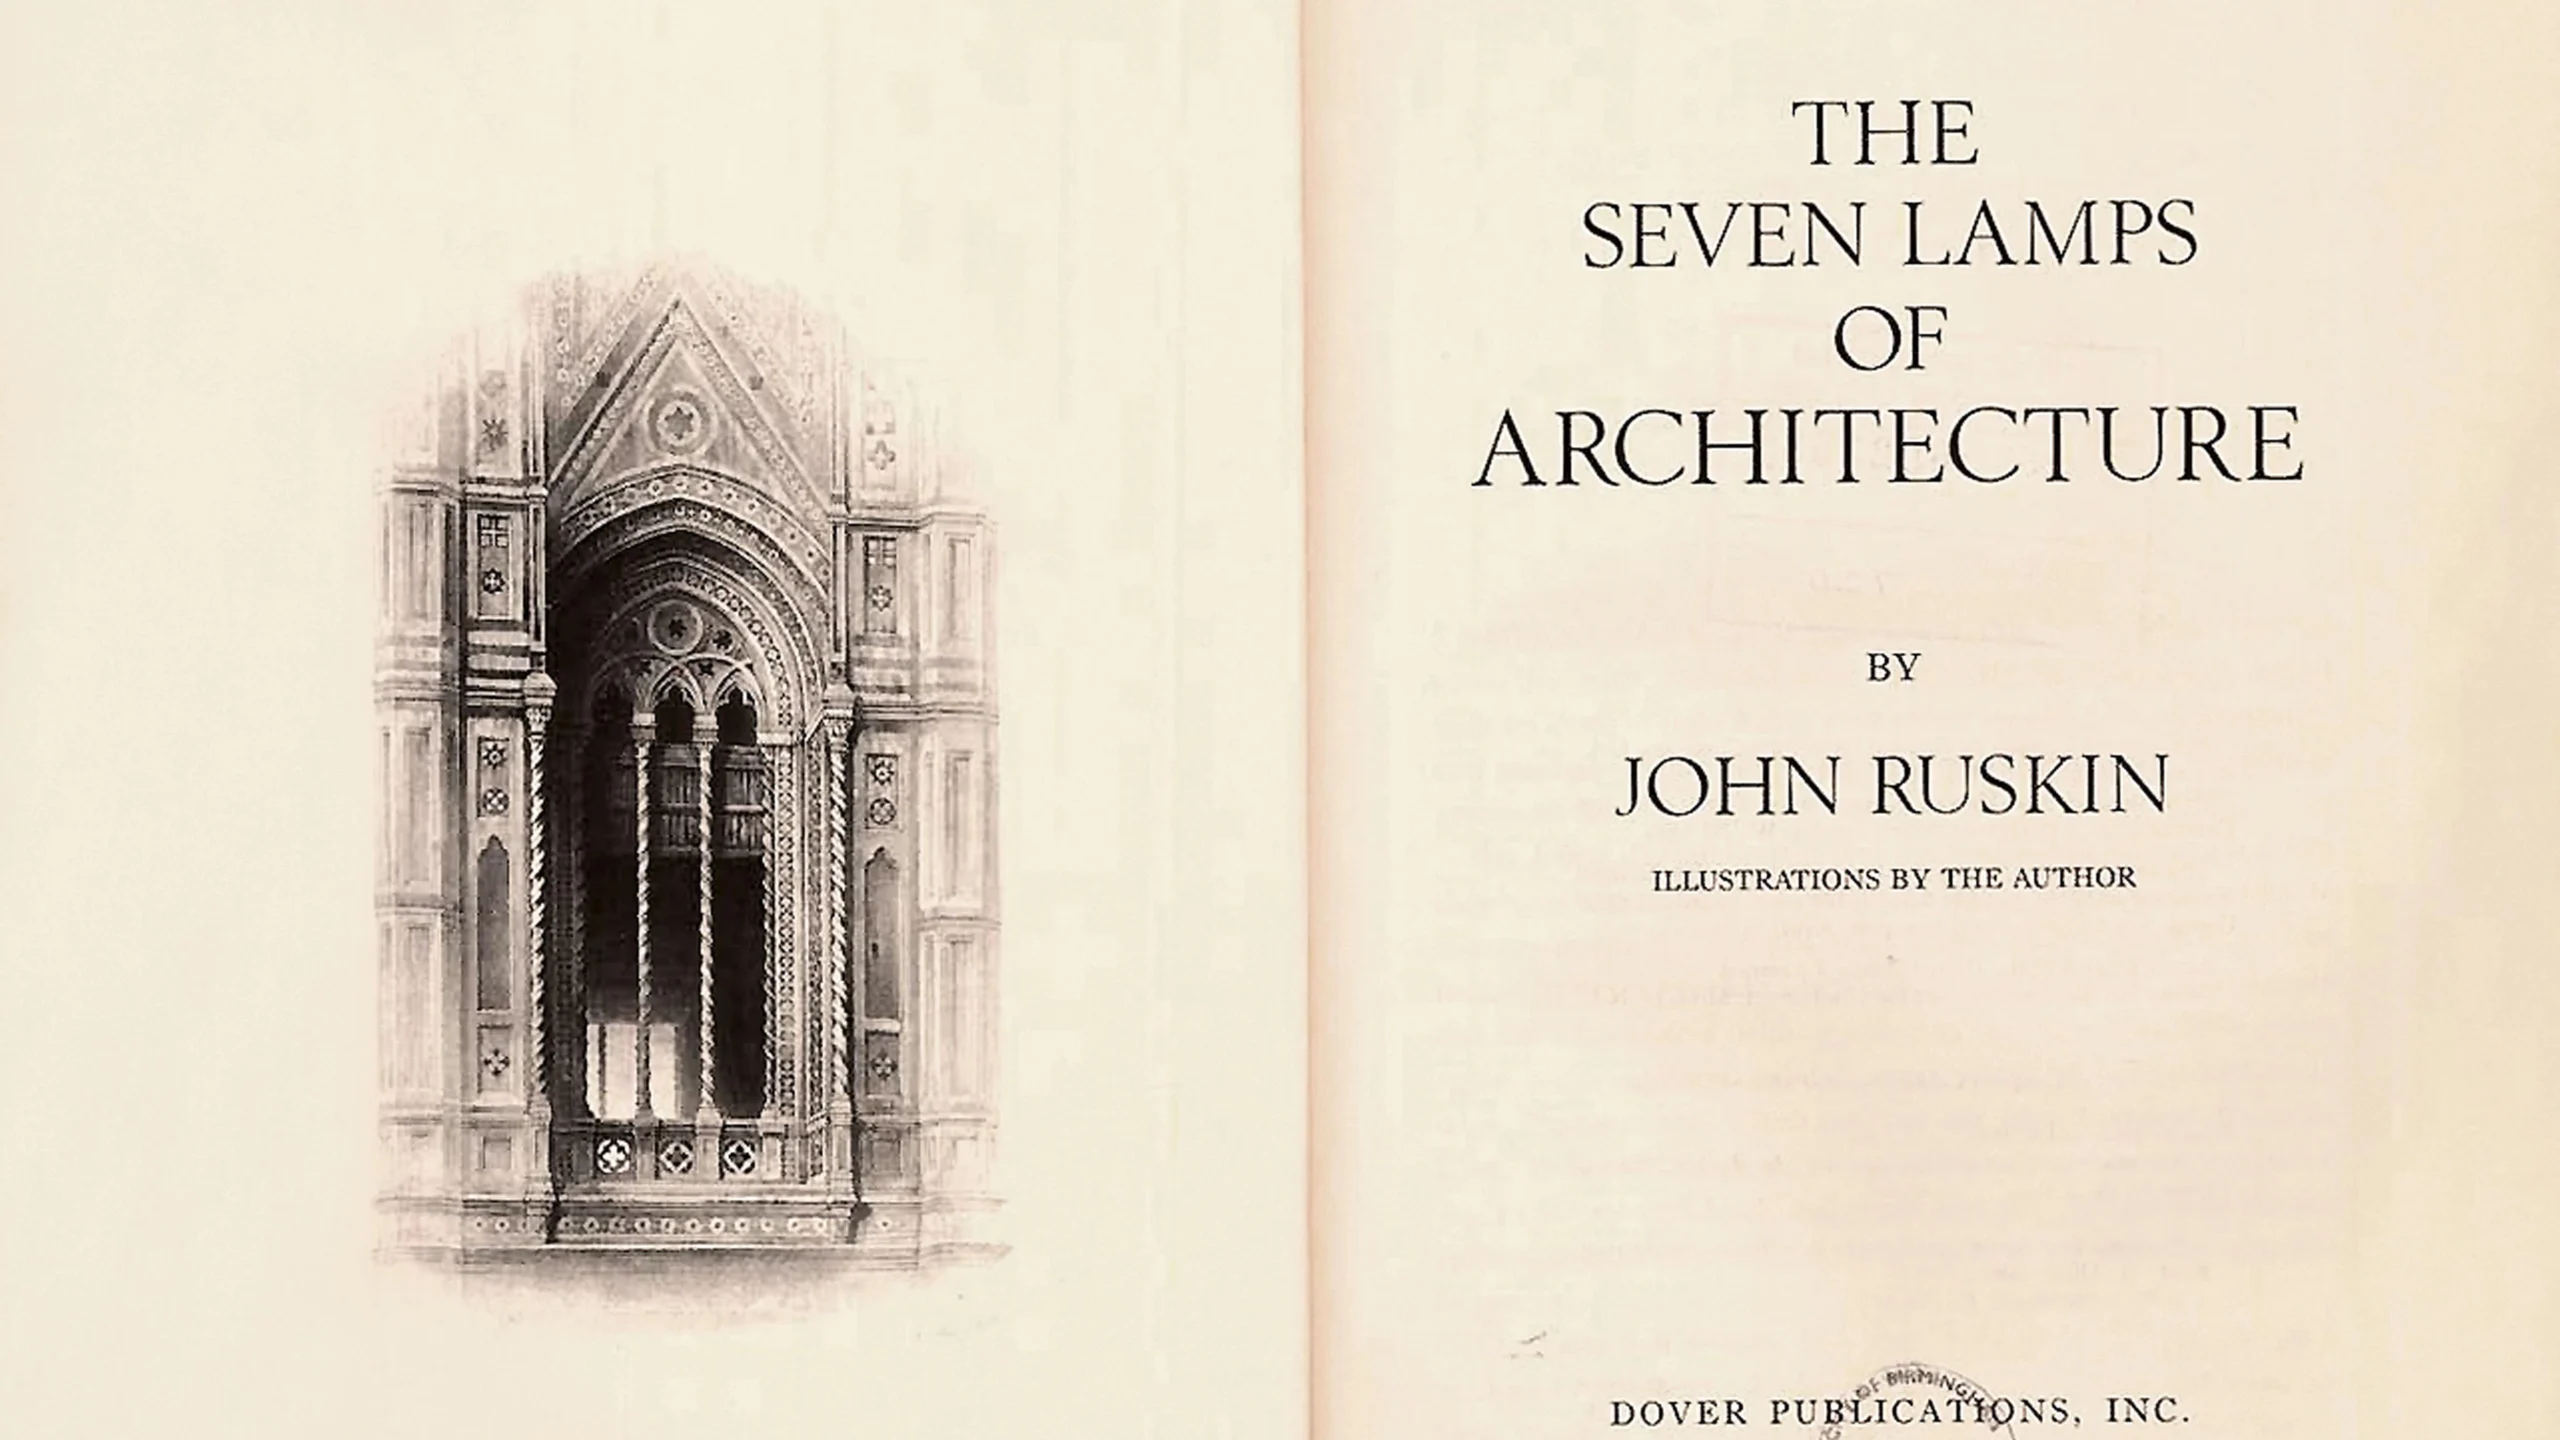 john ruskin las siete lámparas de la arquitectura - Qué es la arquitectura según Ruskin